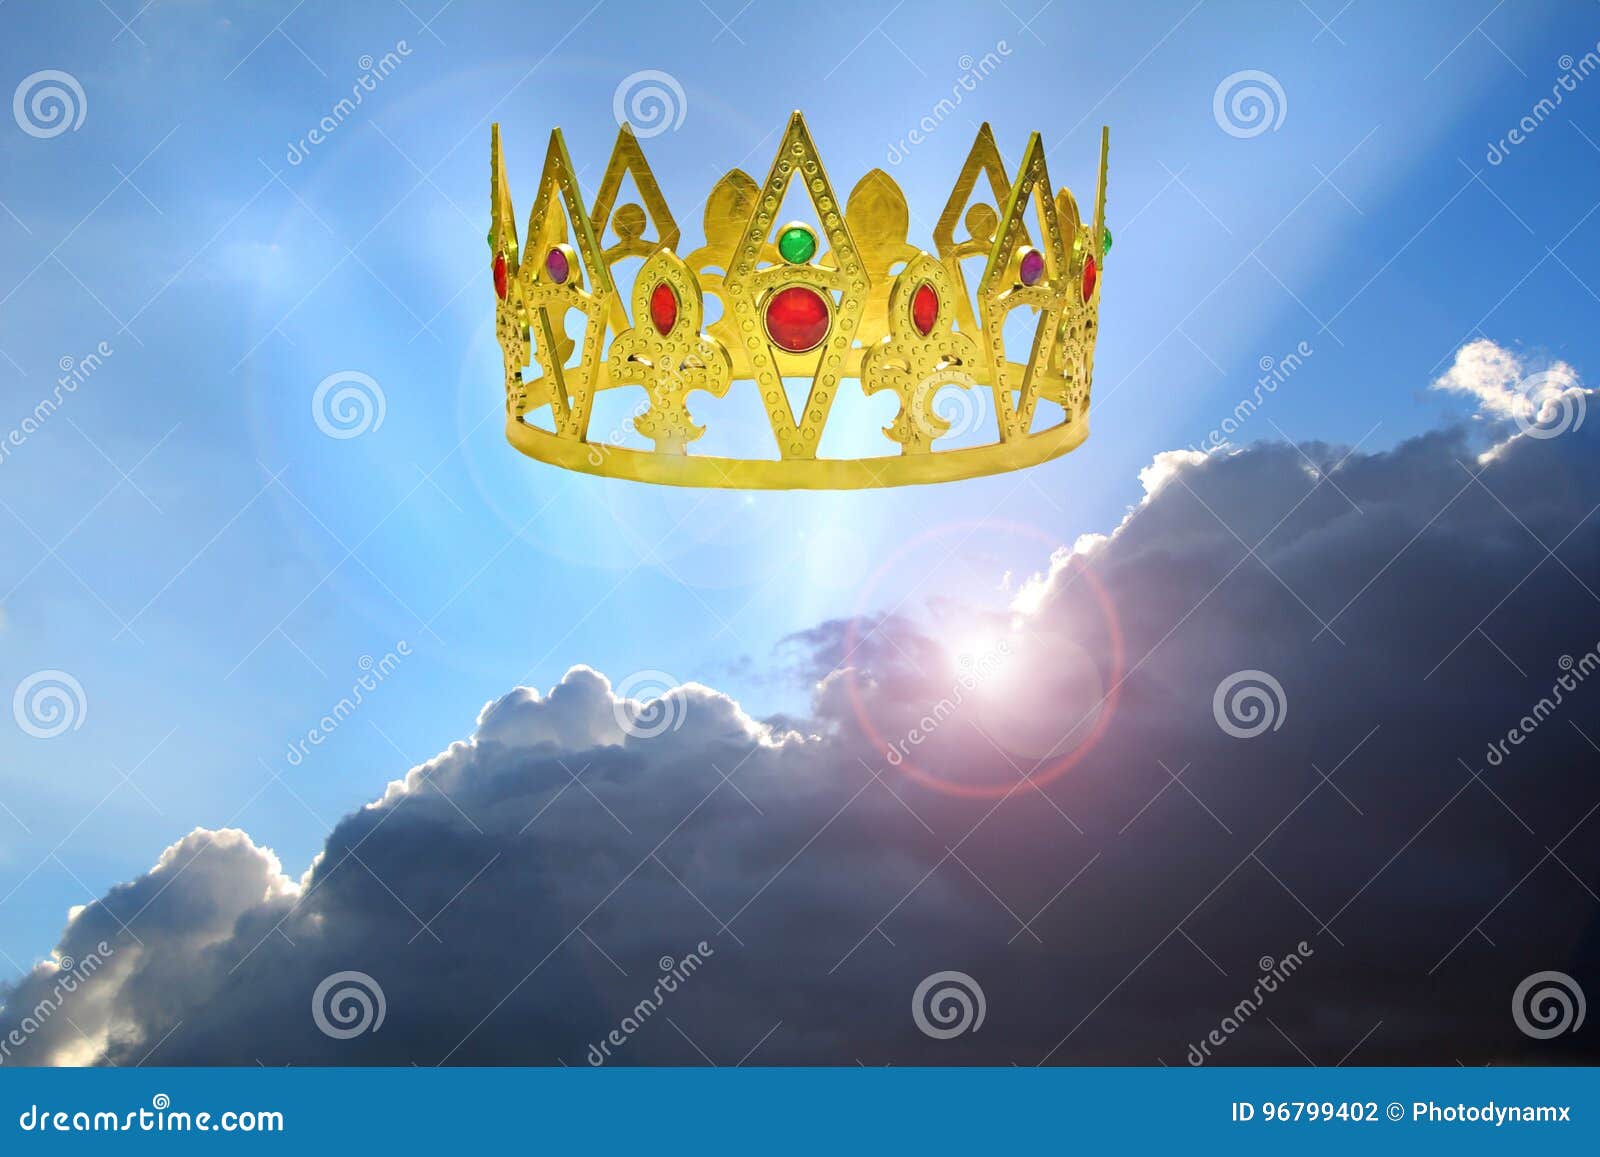 kingdom of the heavens